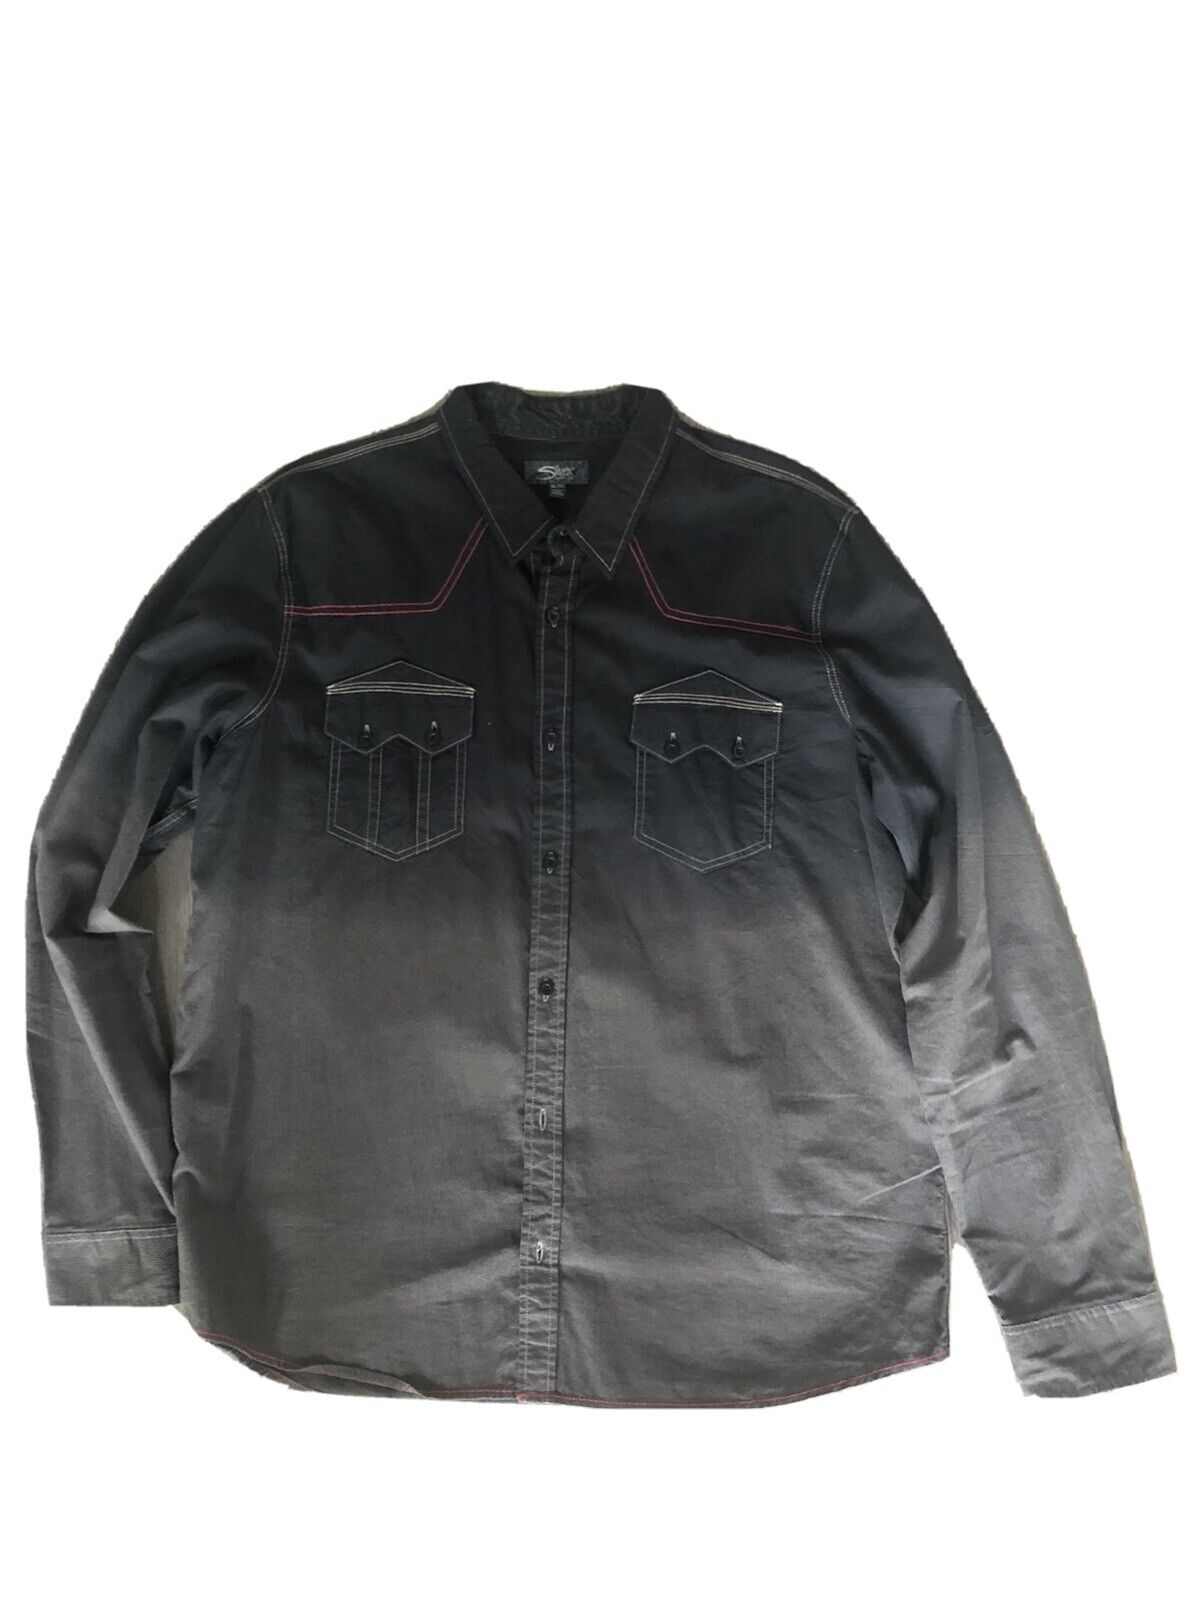 Vintage Black Button Down Dress/Casual Shirt by Silver Jeans- XL